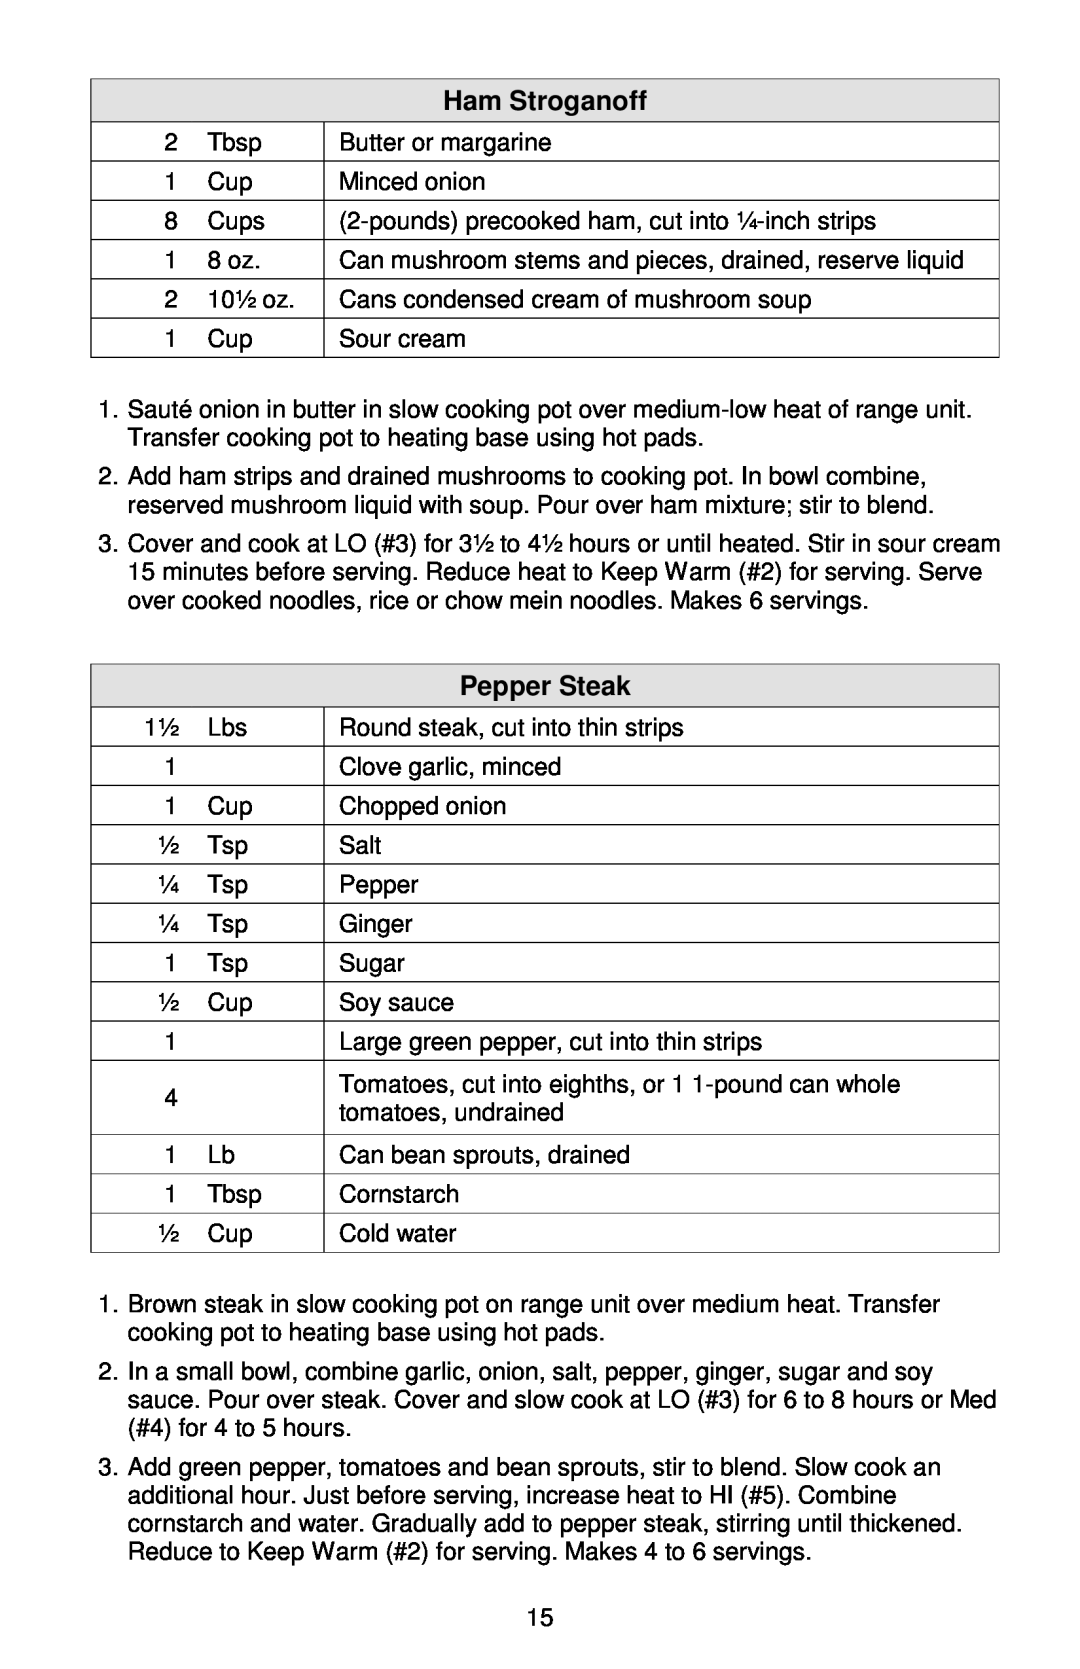 West Bend Cookers instruction manual Ham Stroganoff, Pepper Steak 